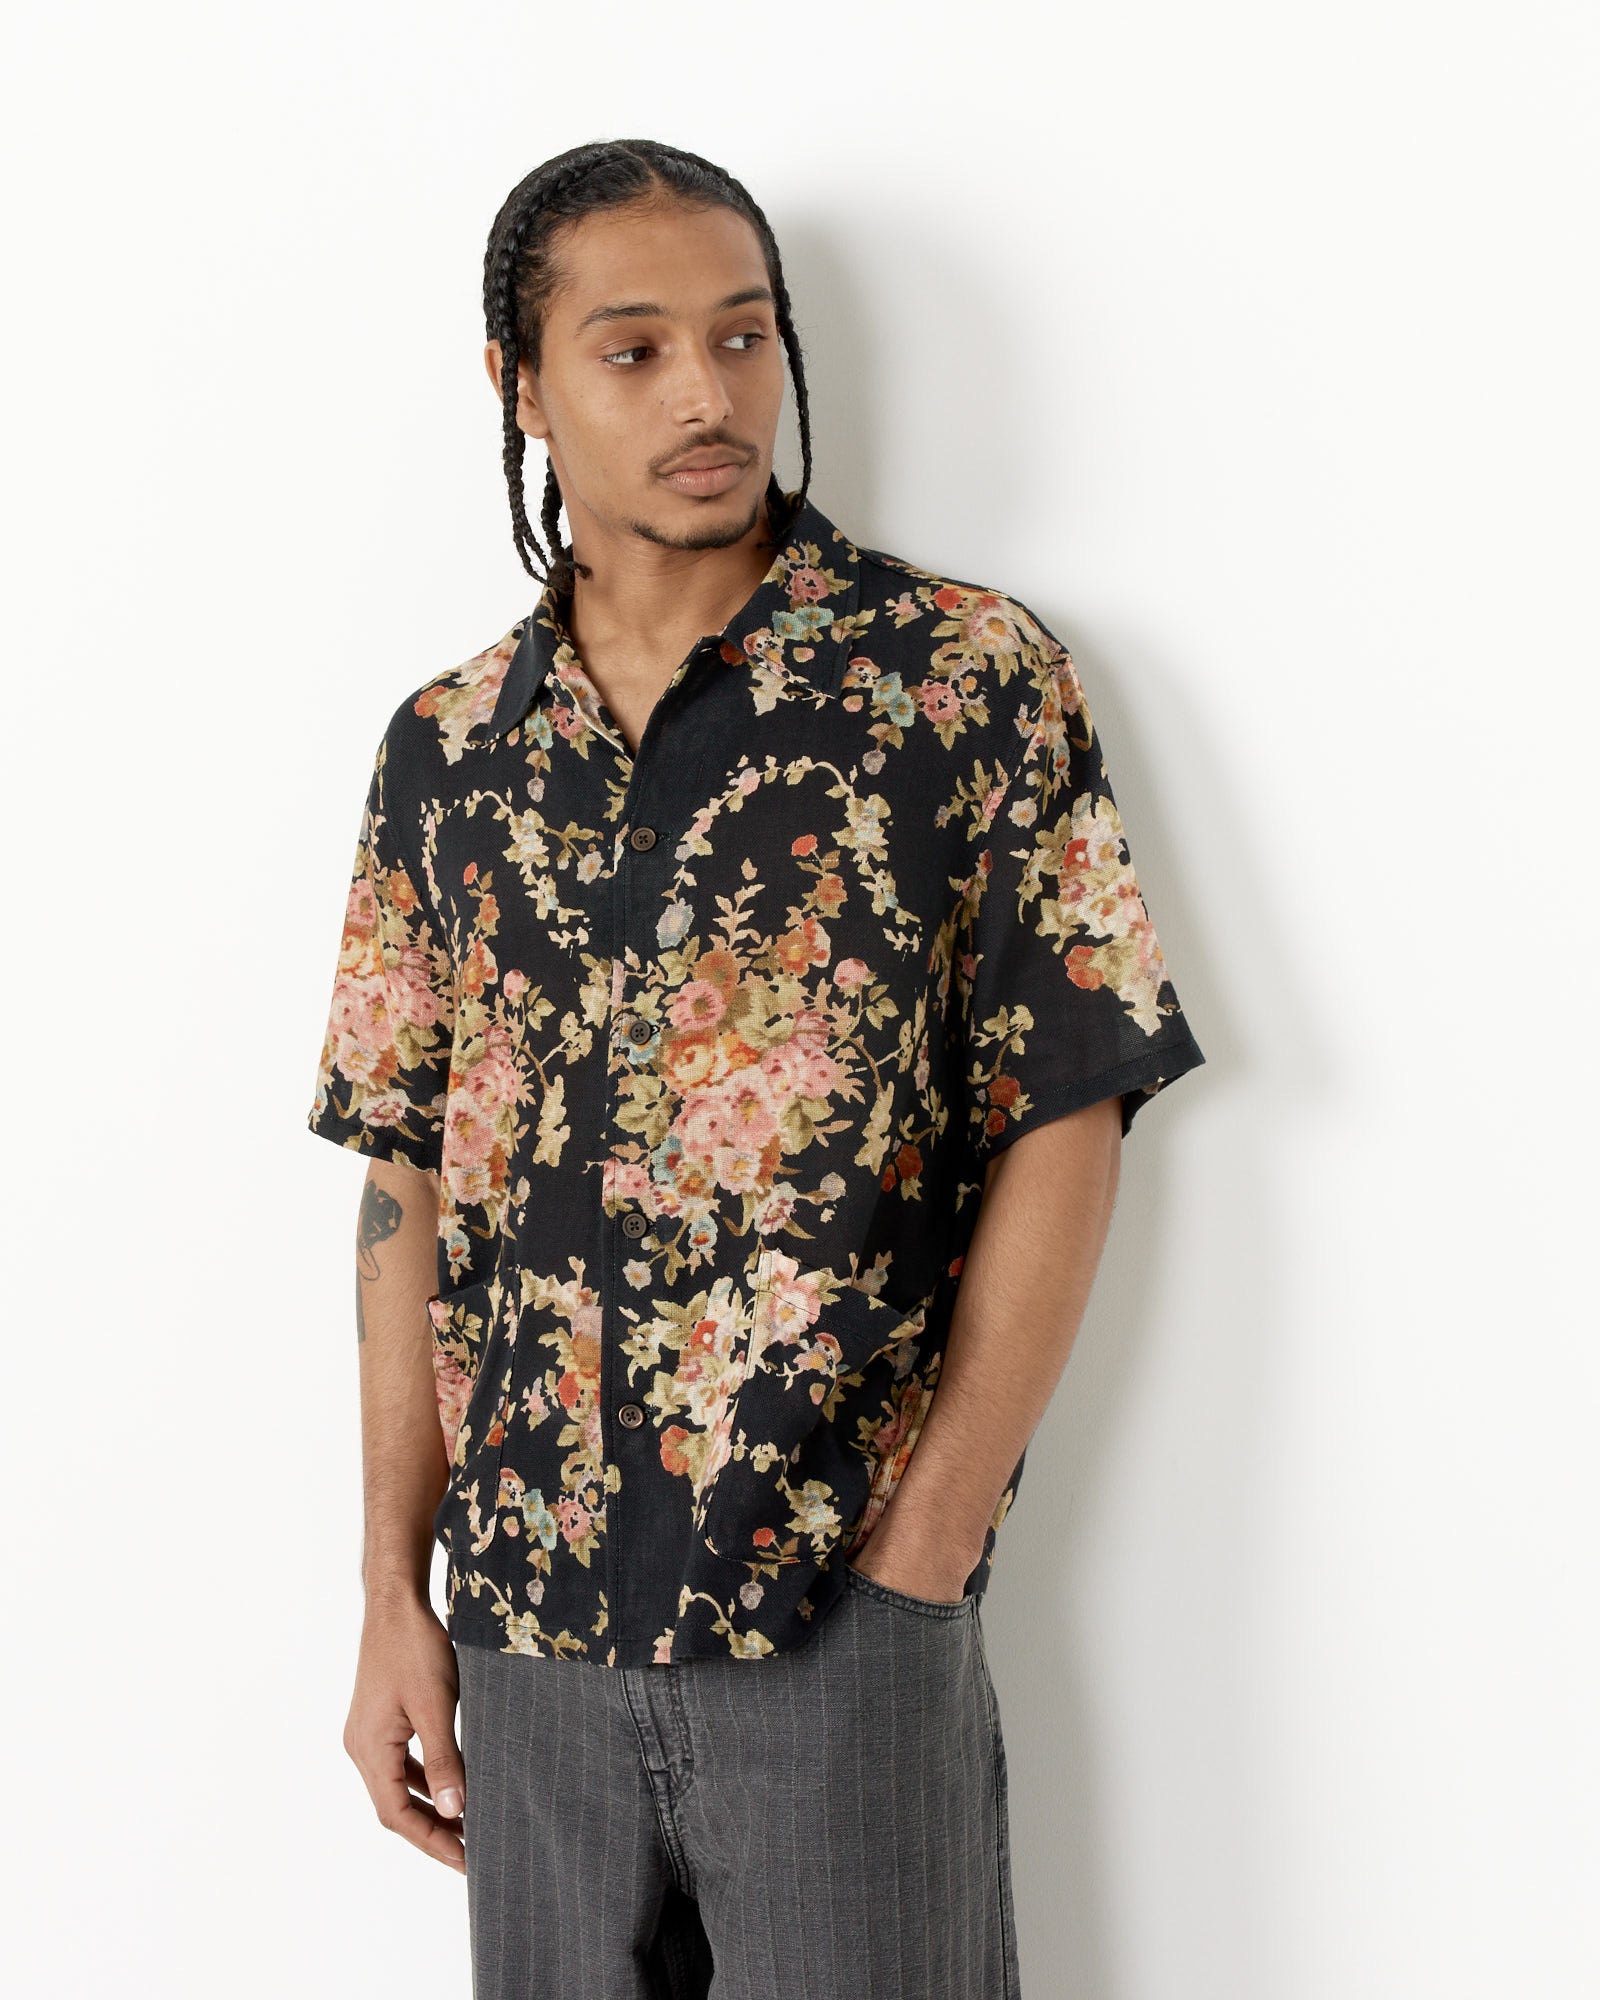 Elder Short Sleeve Shirt in Black Floral Tapestry